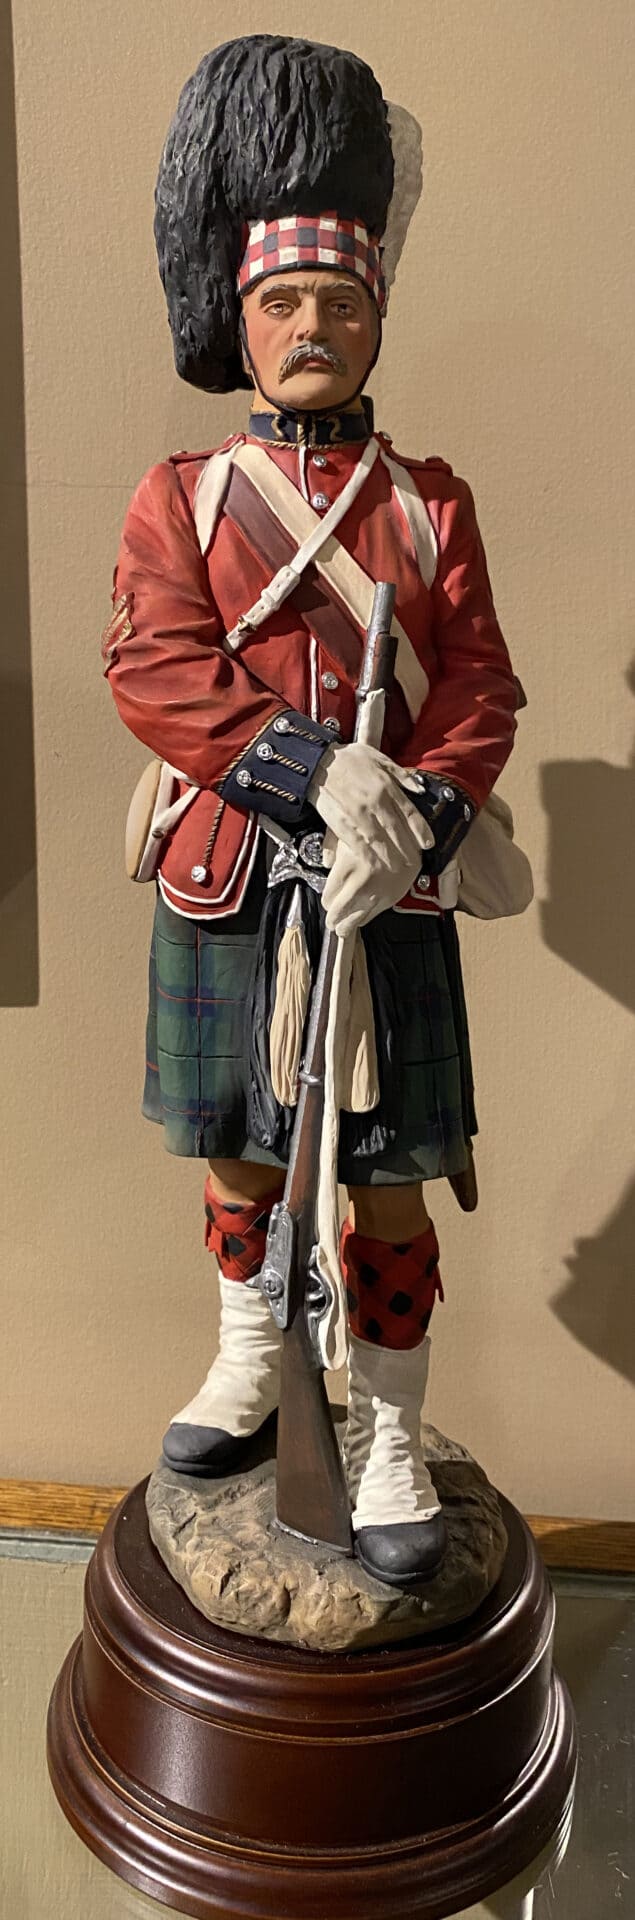 48th Highlander Musketry Training Uniform Statue